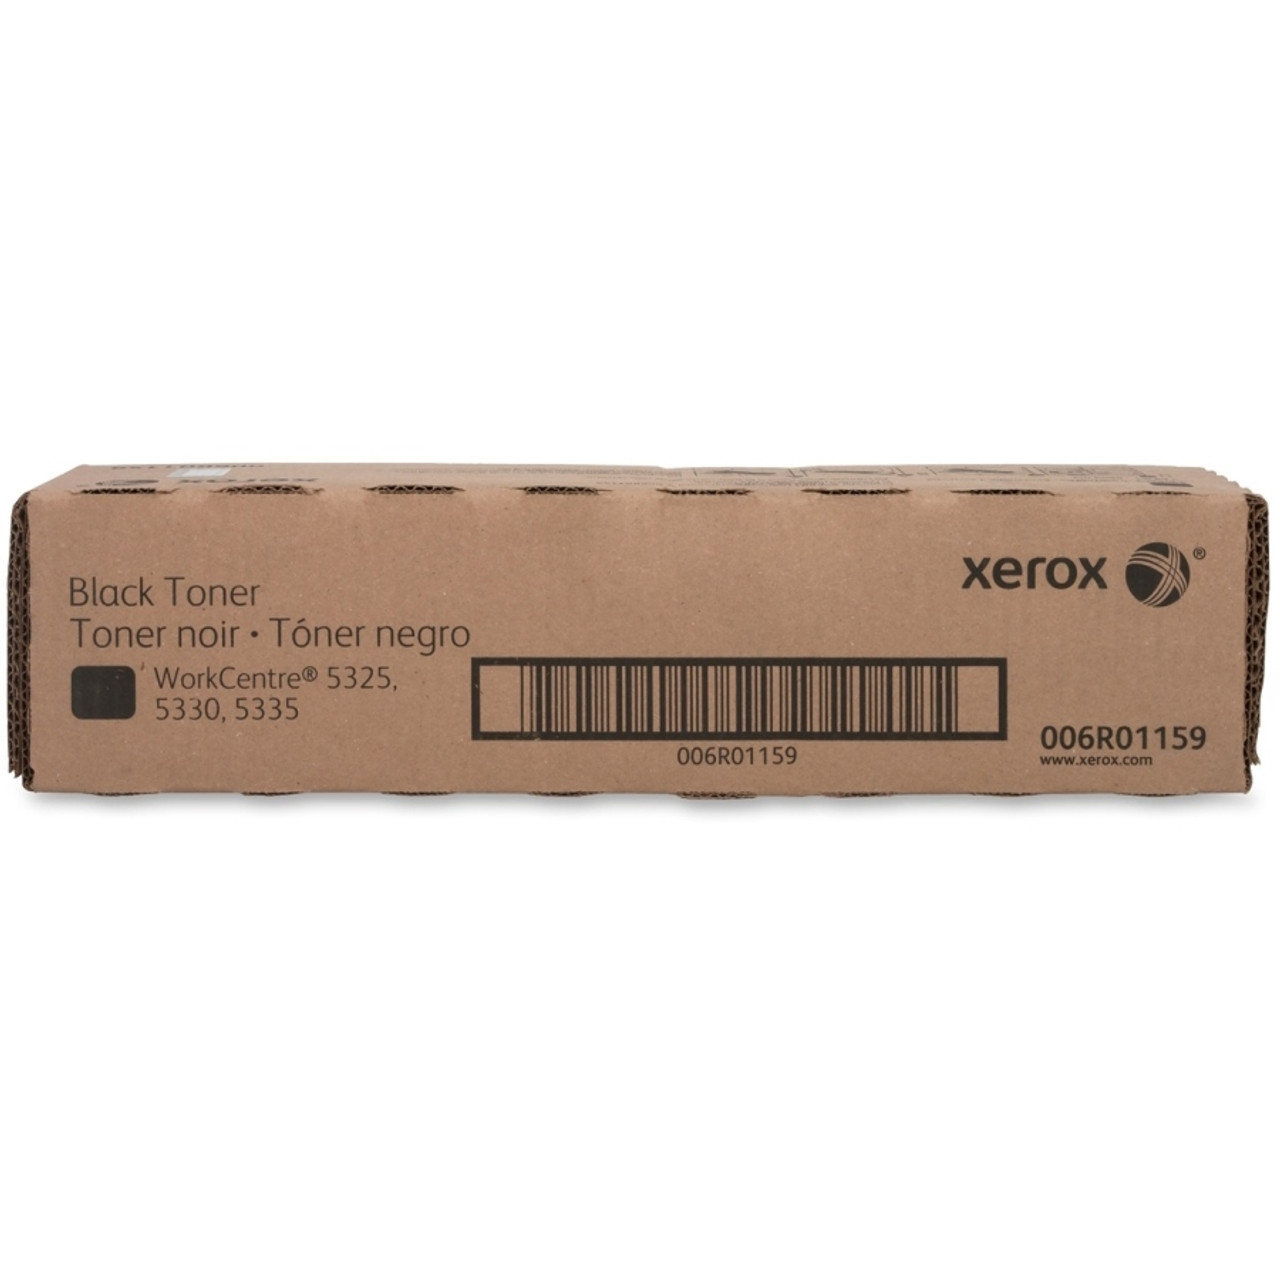 006R01159 | Original Xerox WorkCentre 5325/5330 Laser Toner Cartridge -  Black Toner - Toner Buzz